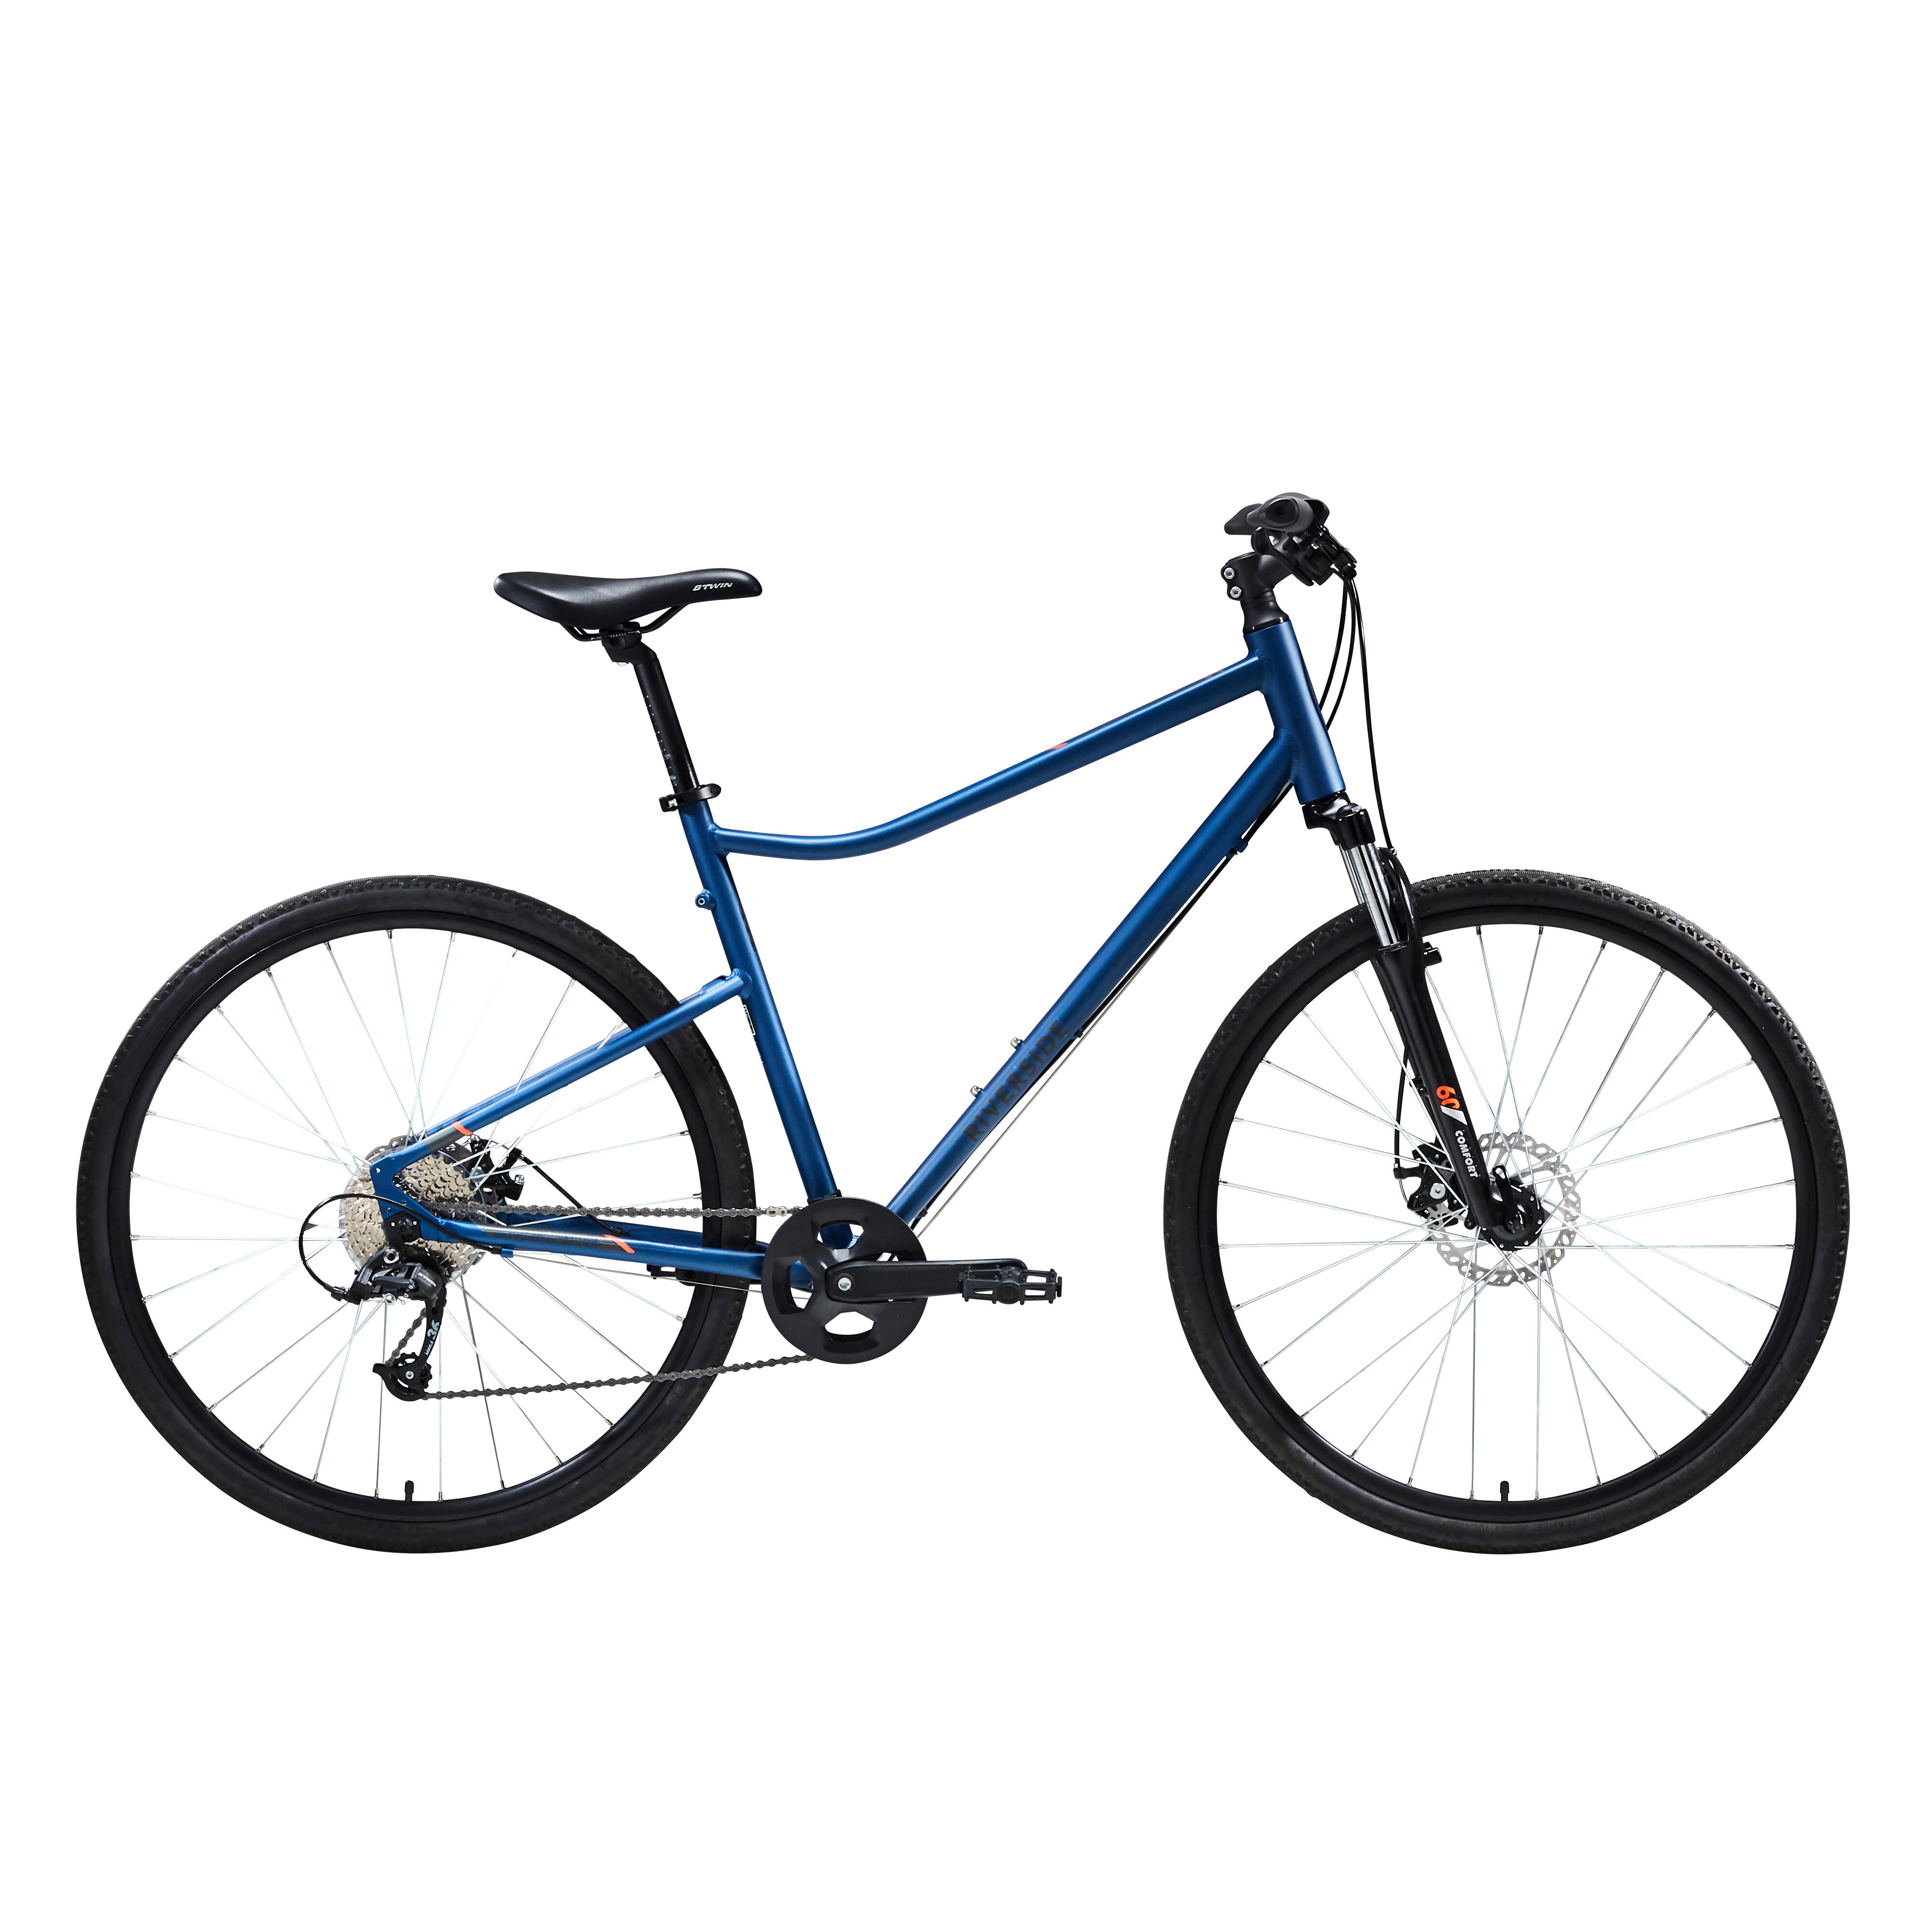 Bicicletă polivalentă Riverside 500 Albastru